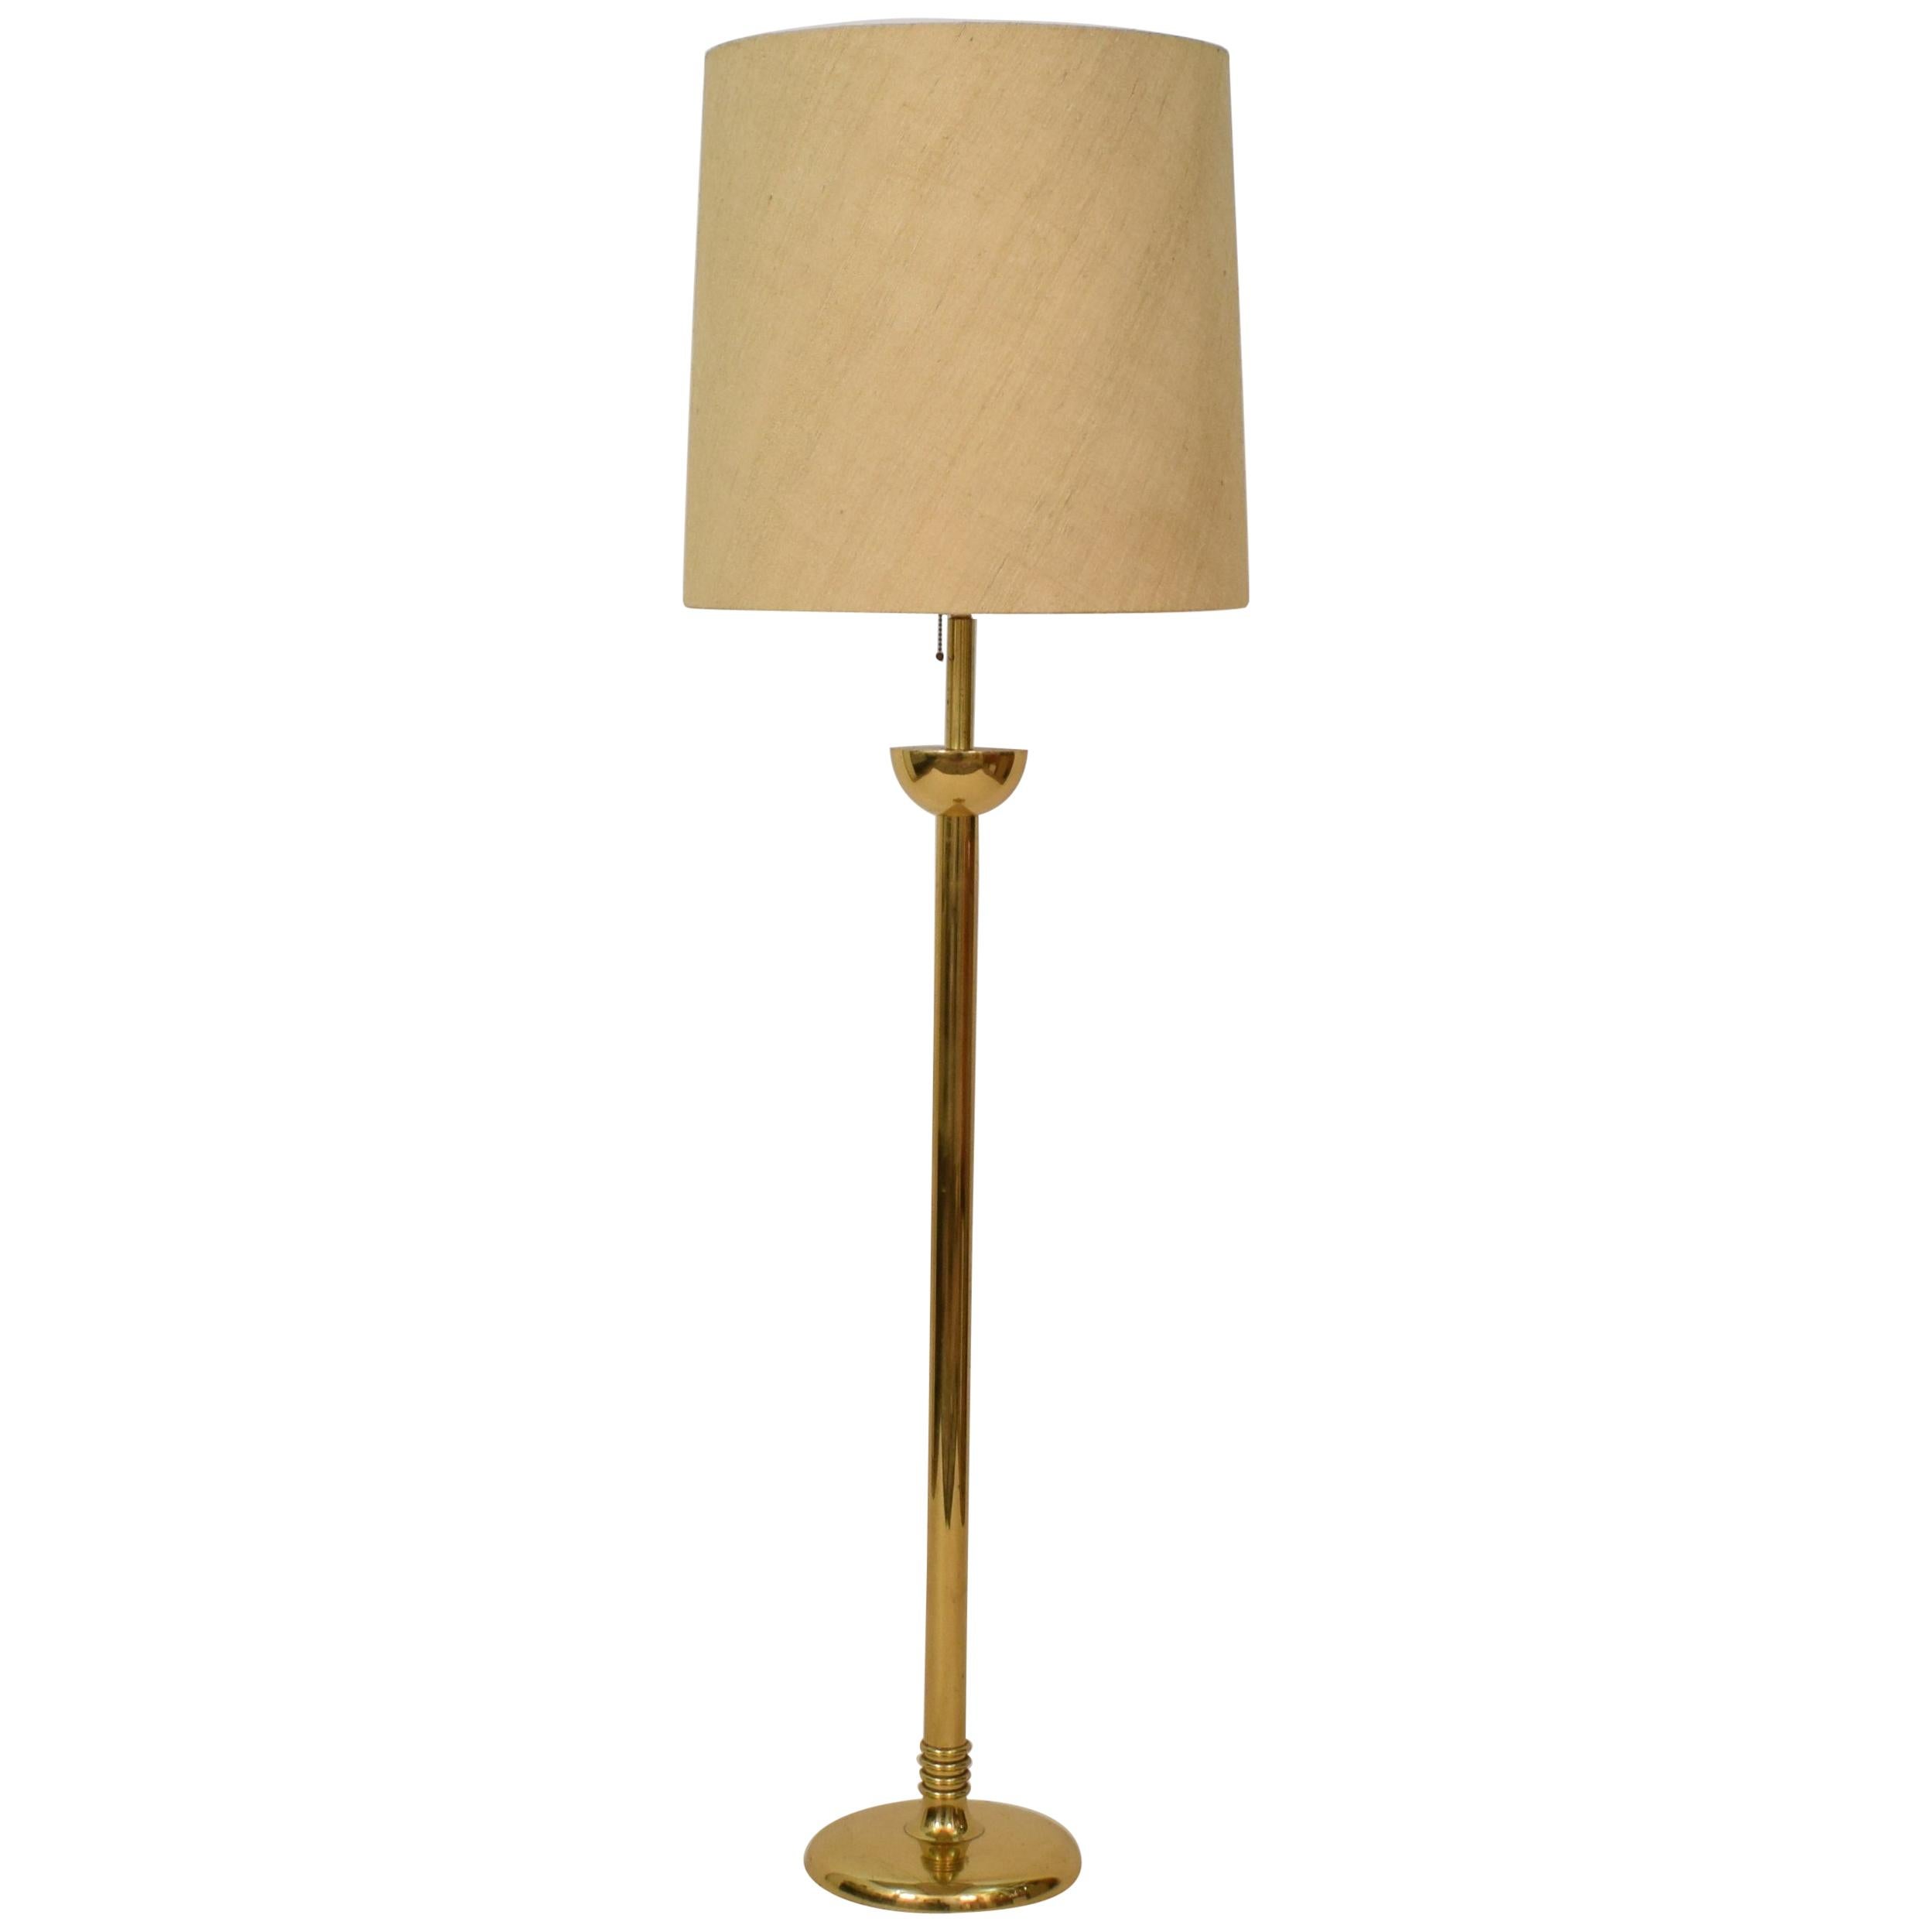 Mid-Century Modern French Brass Standard Floor Lamp with Original Shade, 1960s